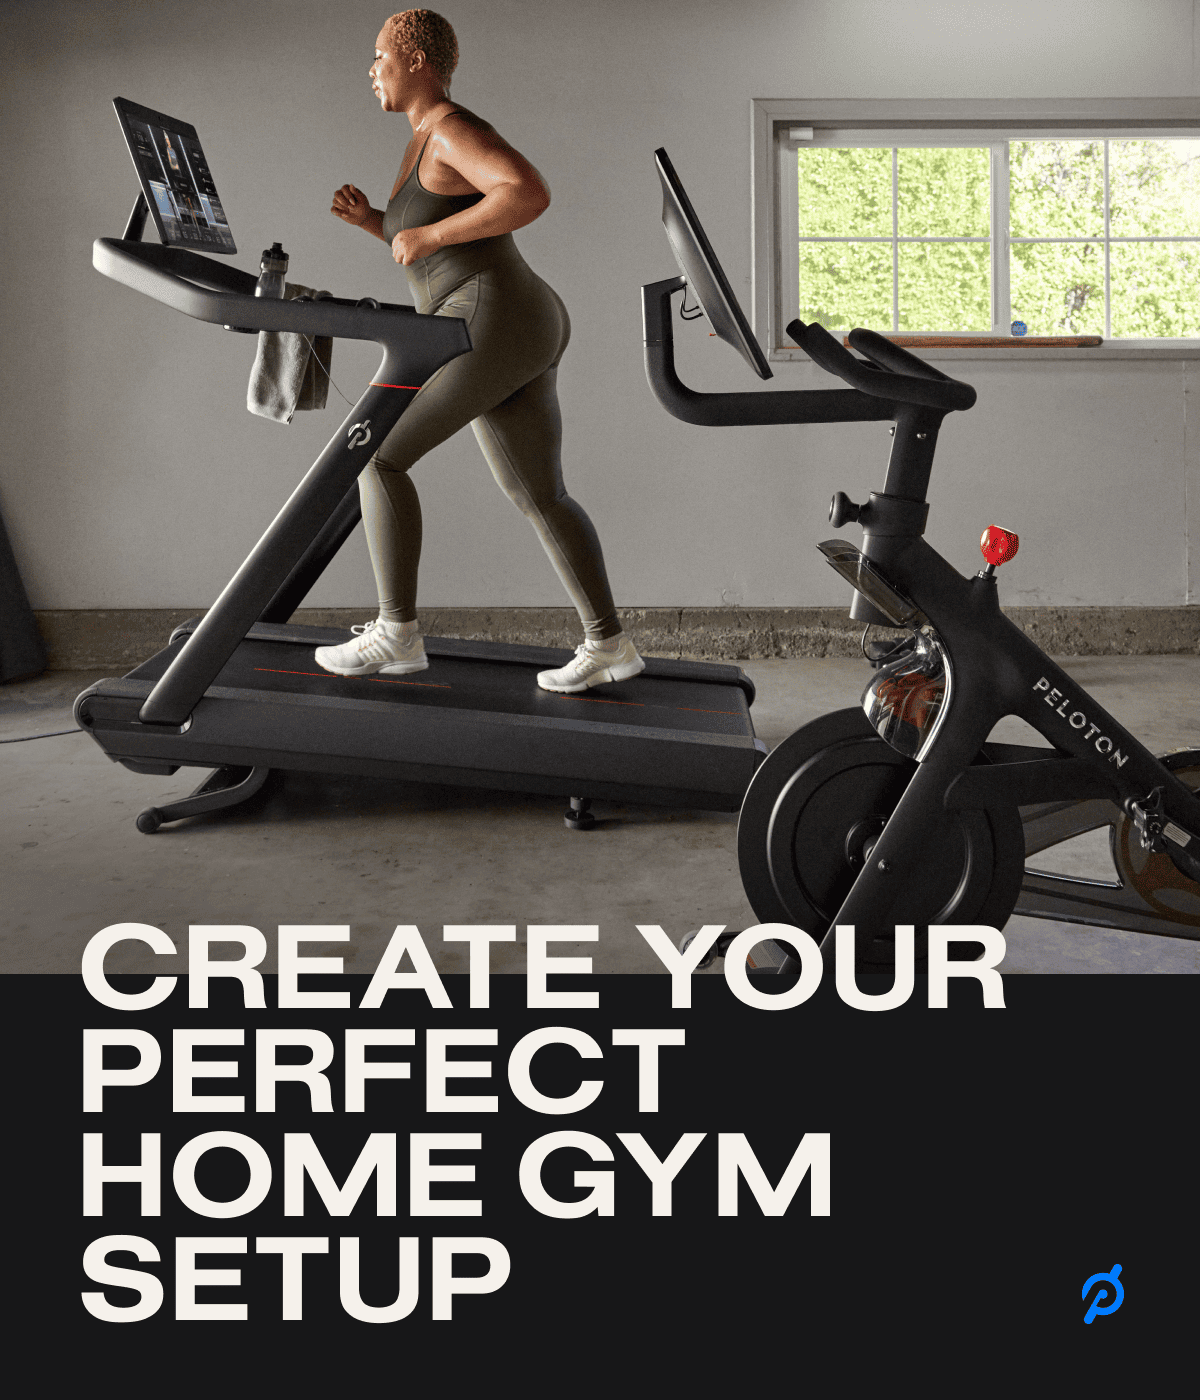 Create your perfect home gym setup